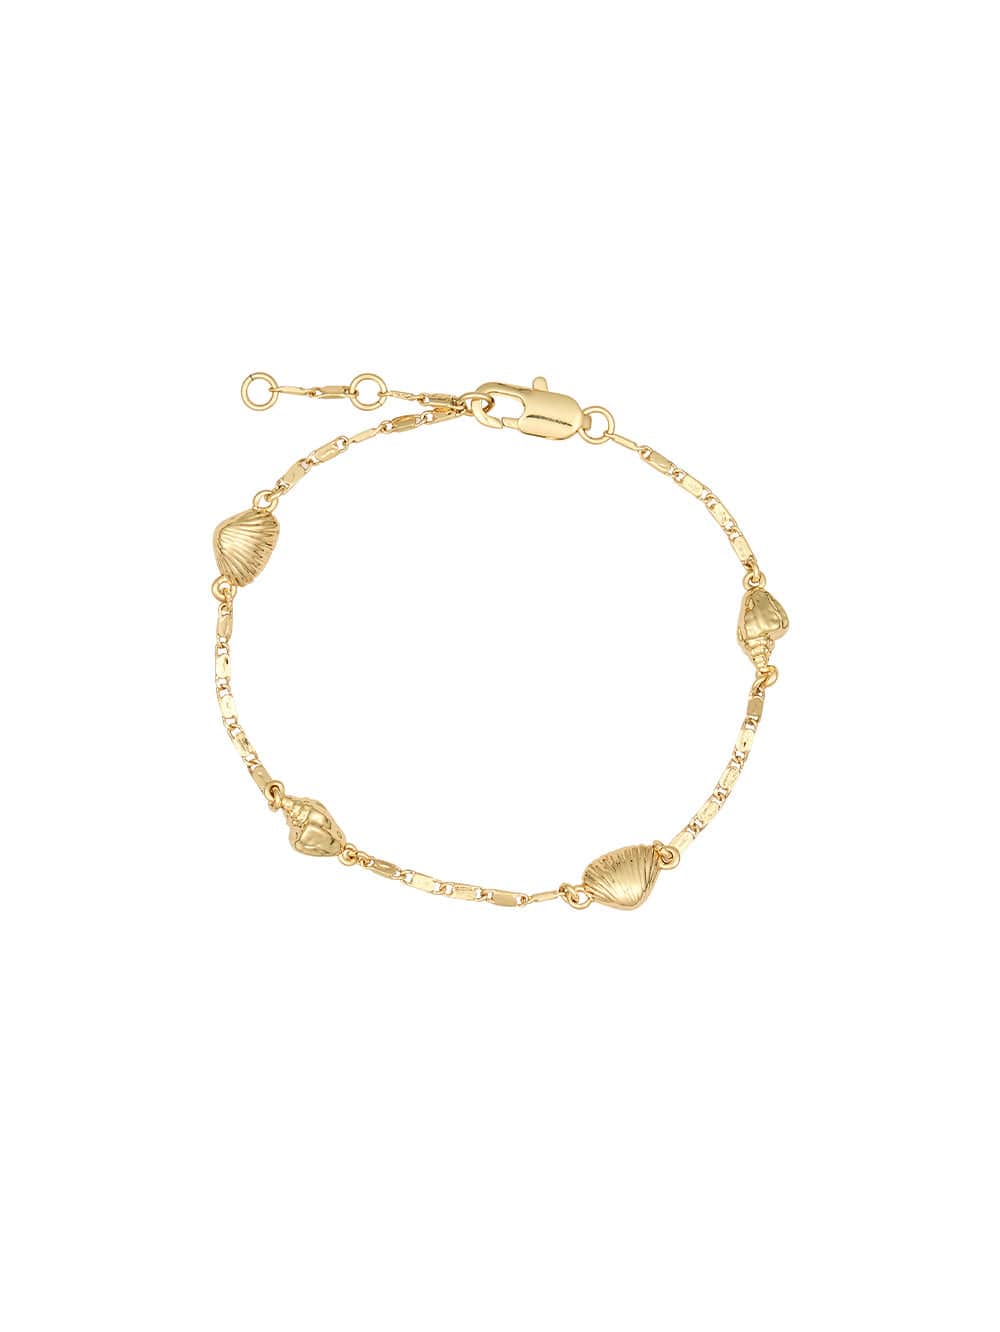 Thalassa Bracelet KIVARI - Gold shell studs on gold chain bracelet